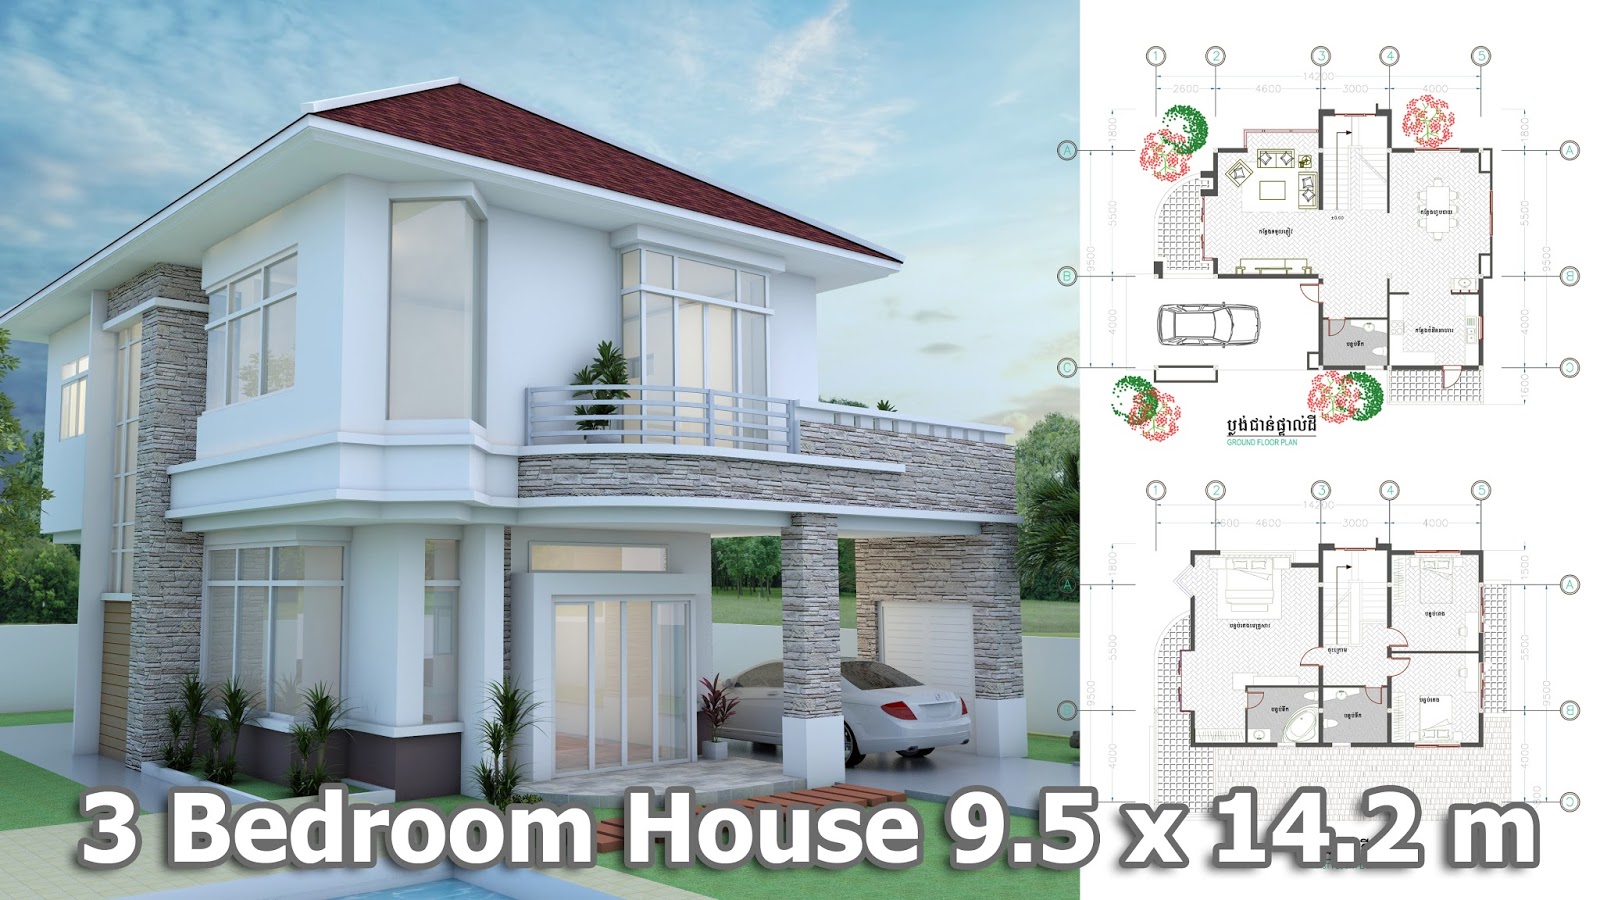 Modern Home  Plan  9m5 x 14m2 Free Pdf  AutoCad  SketchUp 